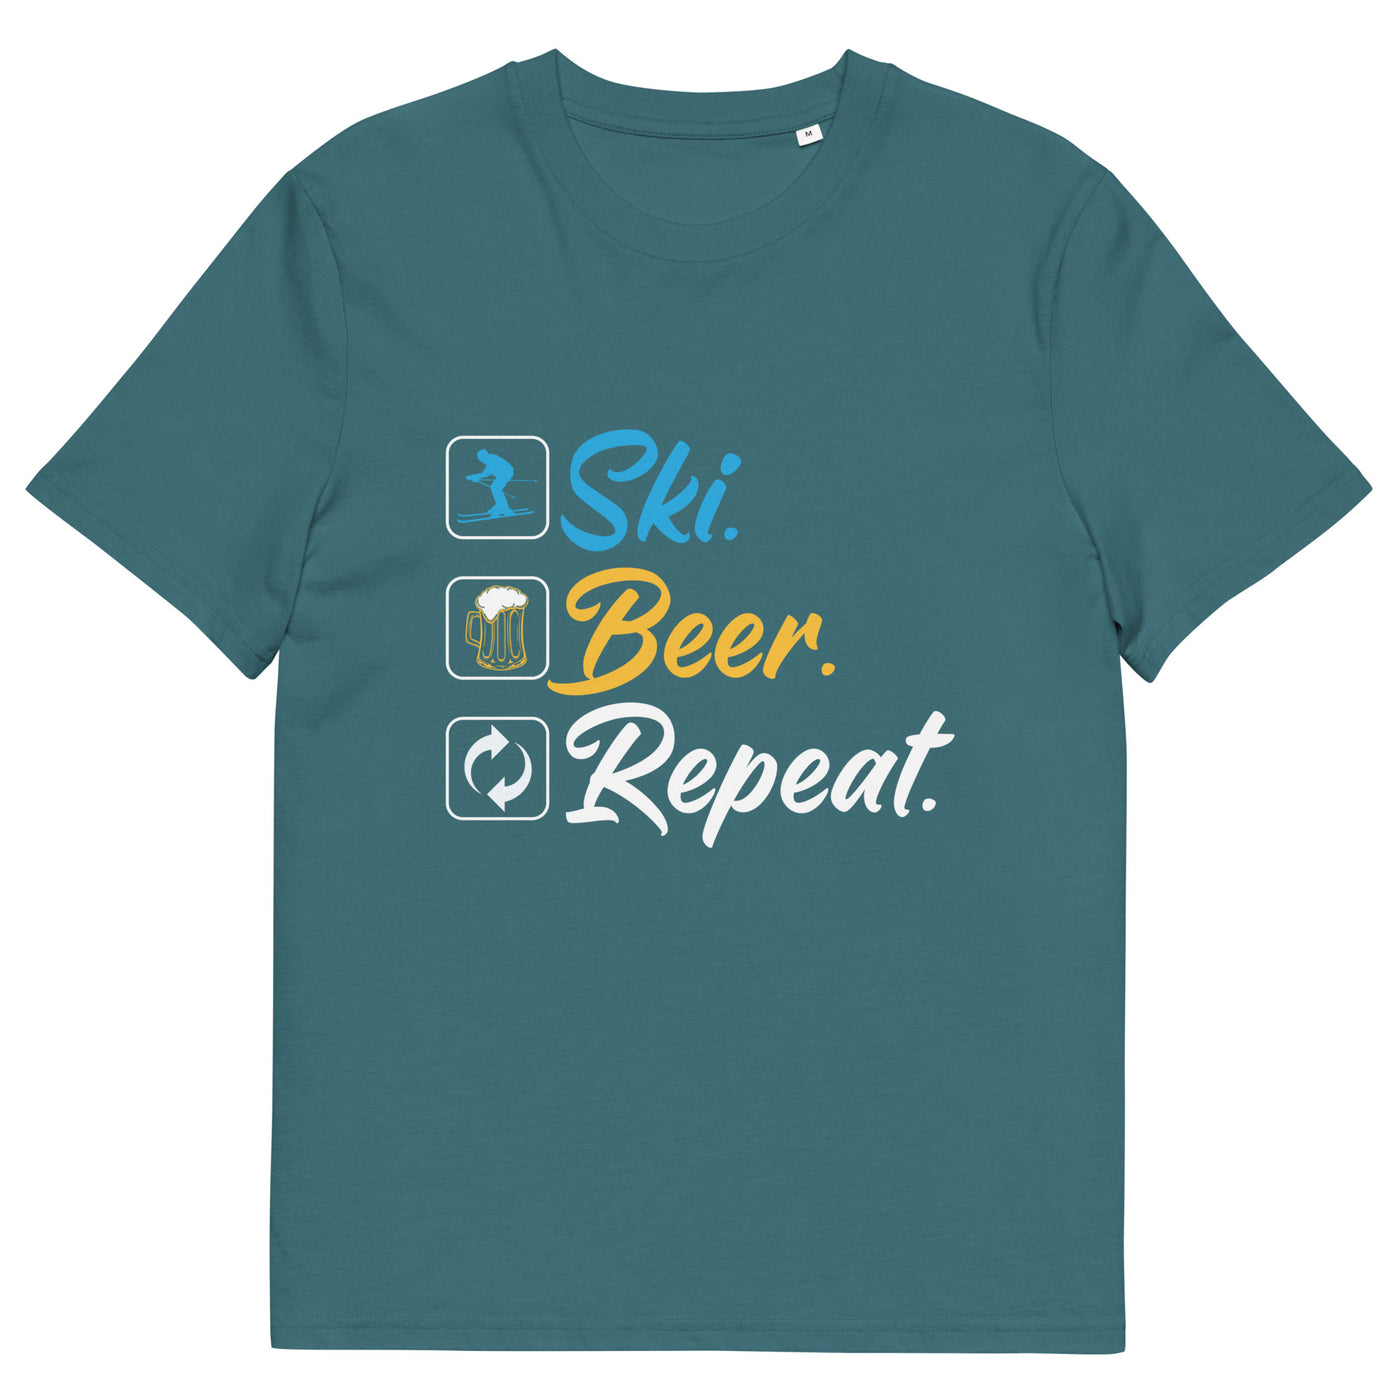 Ski. Bär. Repeat. - (S.K) - Herren Premium Organic T-Shirt klettern xxx yyy zzz Stargazer